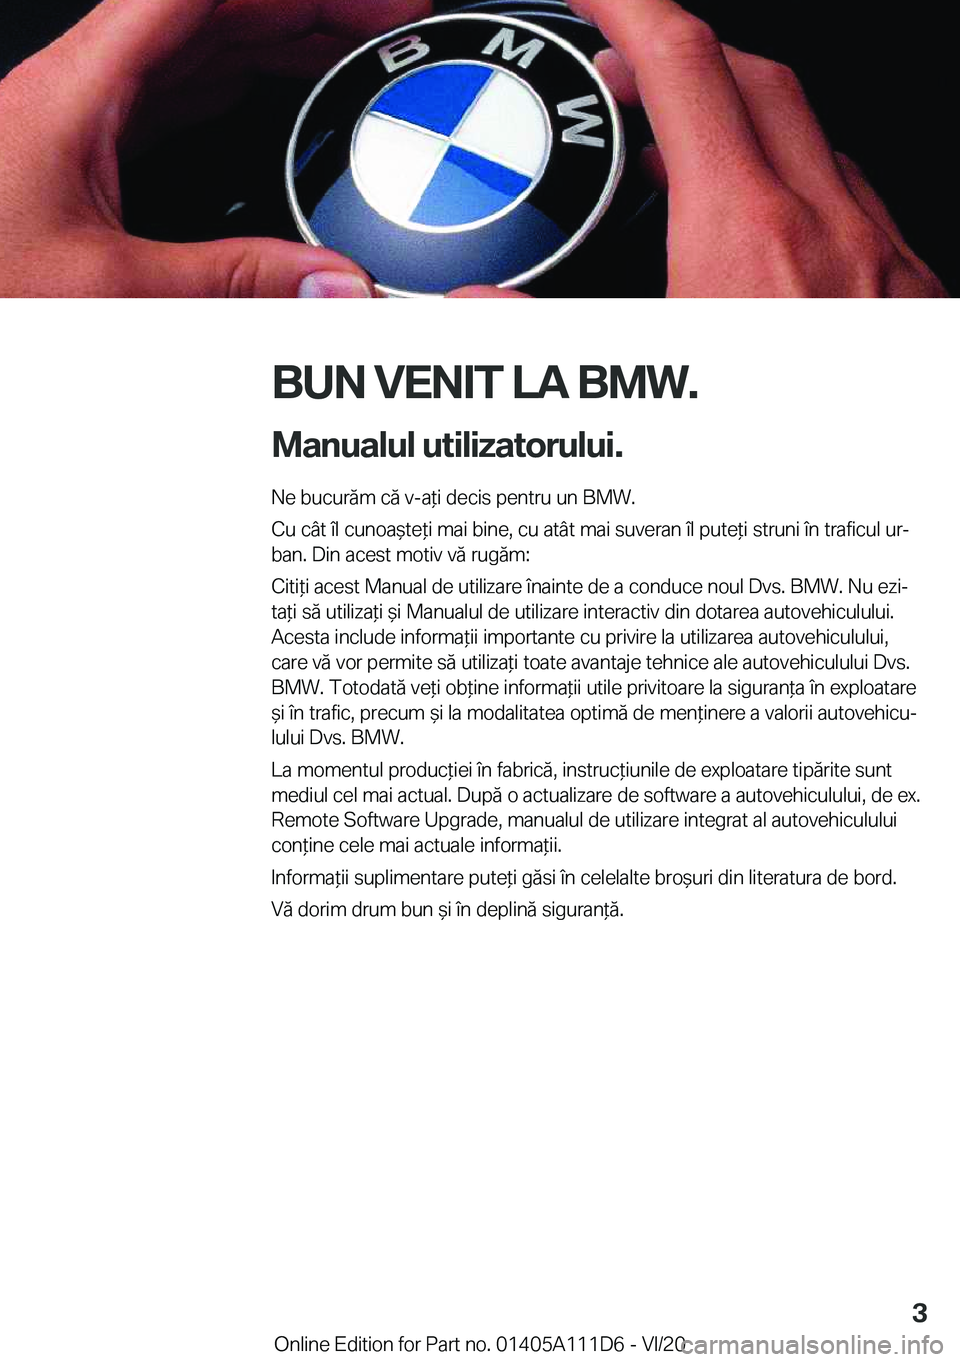 BMW 3 SERIES SEDAN PLUG-IN HYBRID 2021  Ghiduri De Utilizare (in Romanian) �B�U�N��V�E�N�I�T��L�A��B�M�W�.�M�a�n�u�a�l�u�l��u�t�i�l�i�z�a�t�o�r�u�l�u�i�.
�N�e��b�u�c�u�r�ă�m��c�ă��v�-�a*�i��d�e�c�i�s��p�e�n�t�r�u��u�n��B�M�W�.
�C�u��c�